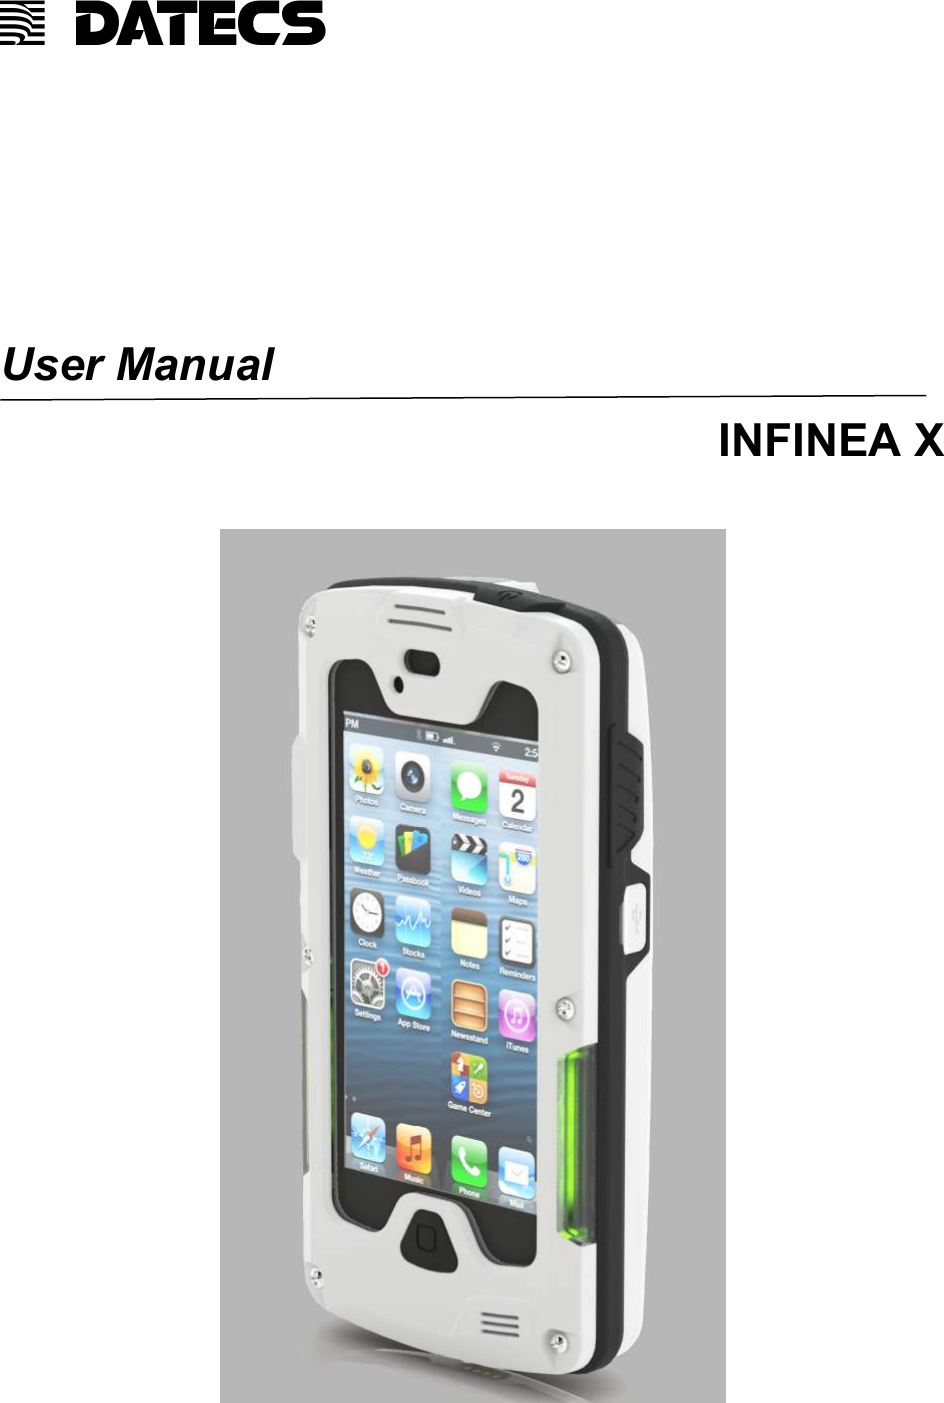 1 DATECS       User Manual INFINEA X        